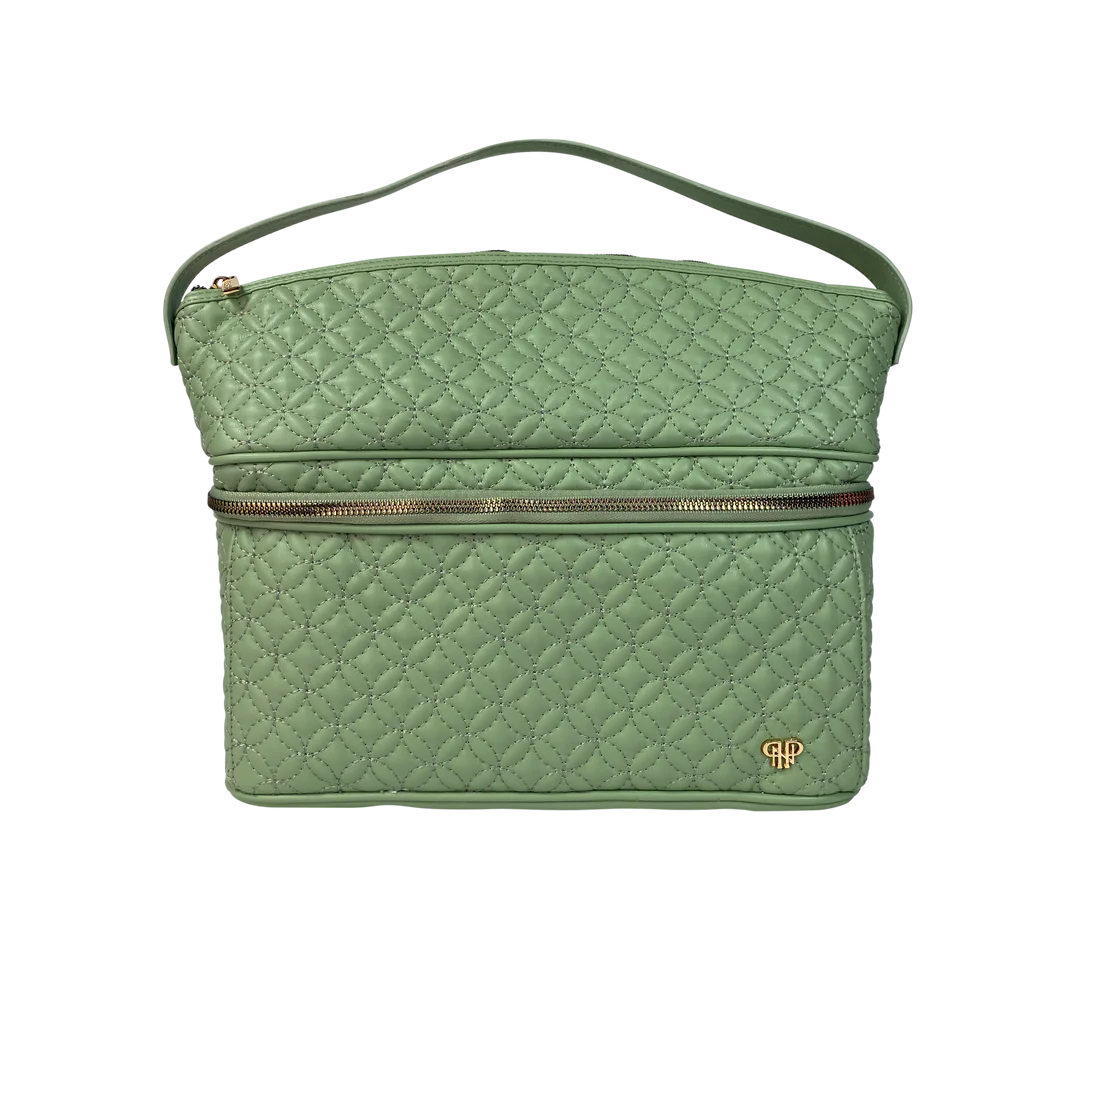 Stylist Travel Bag